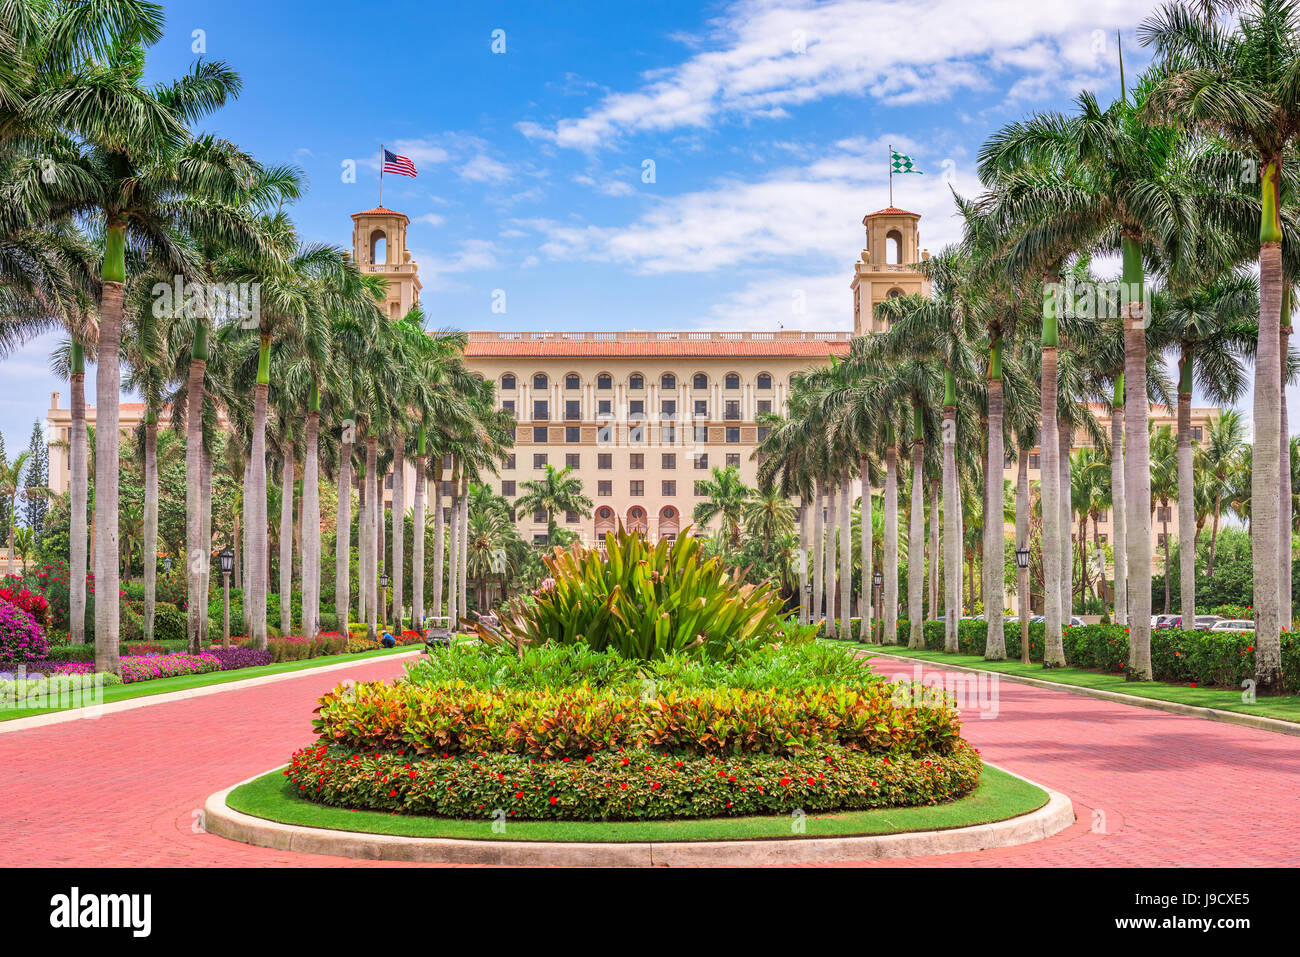 WEST PALM BEACH, Florida - Abril 4, 2016: El exterior de Breakers Hotel en West Palm Beach. El hotel data de 1925. Foto de stock